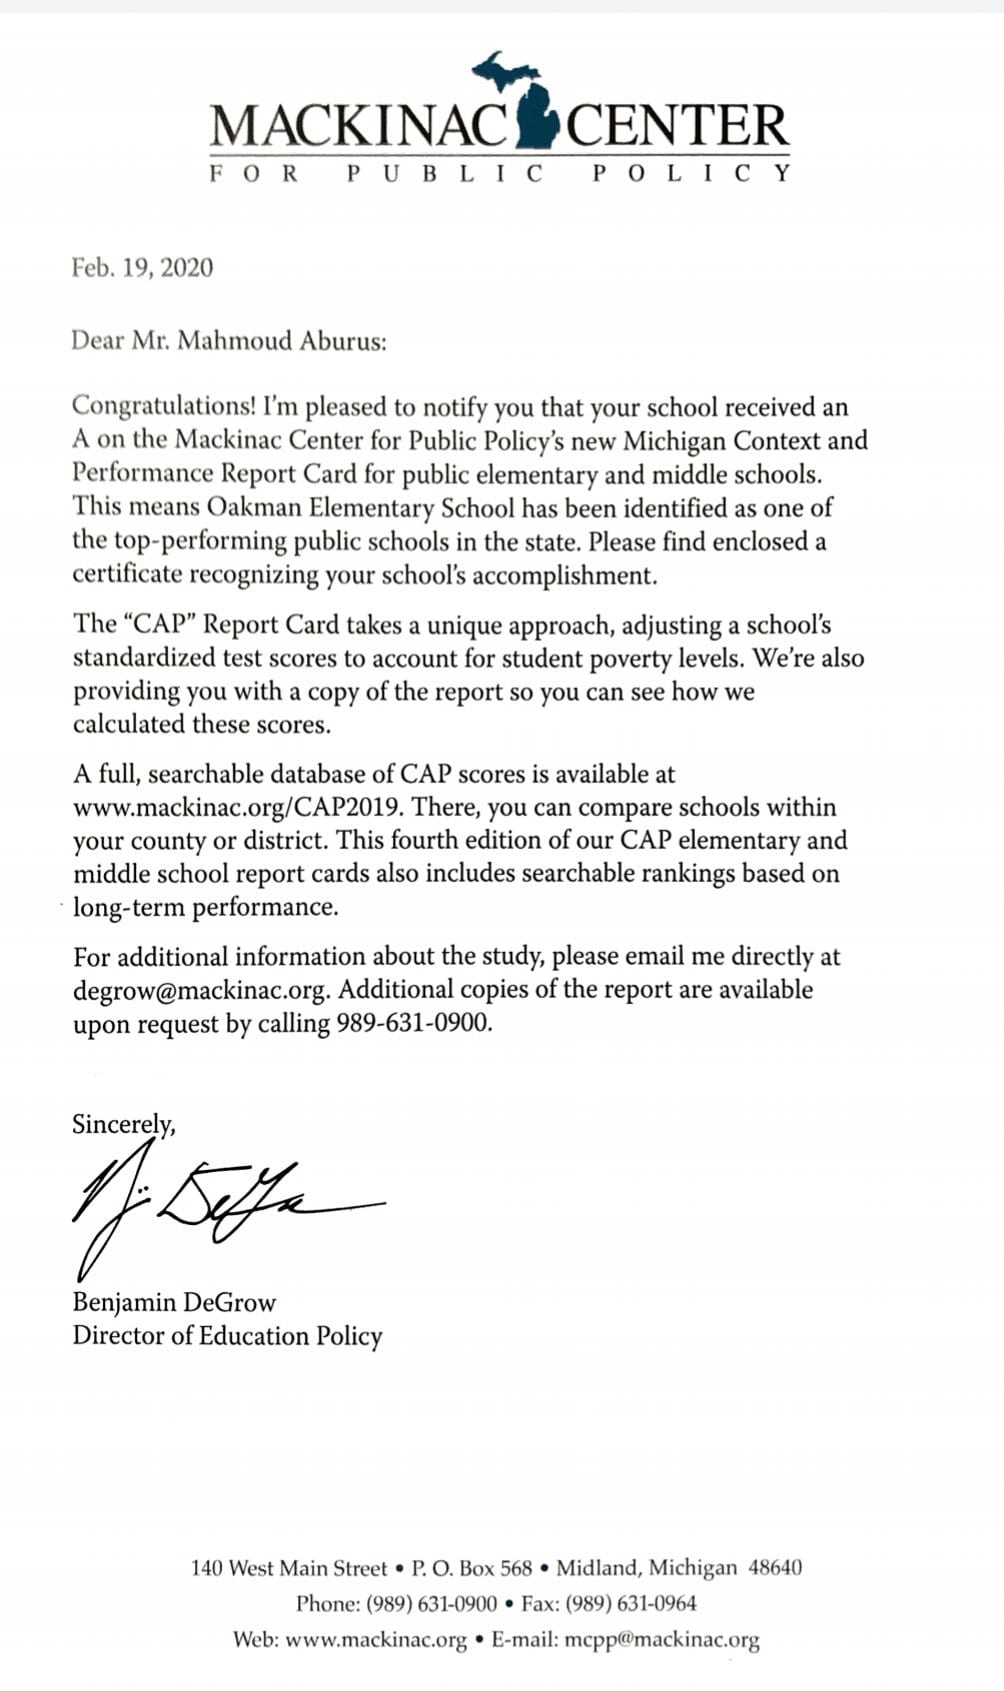 Congratulations to Oakman Elementary School 😊